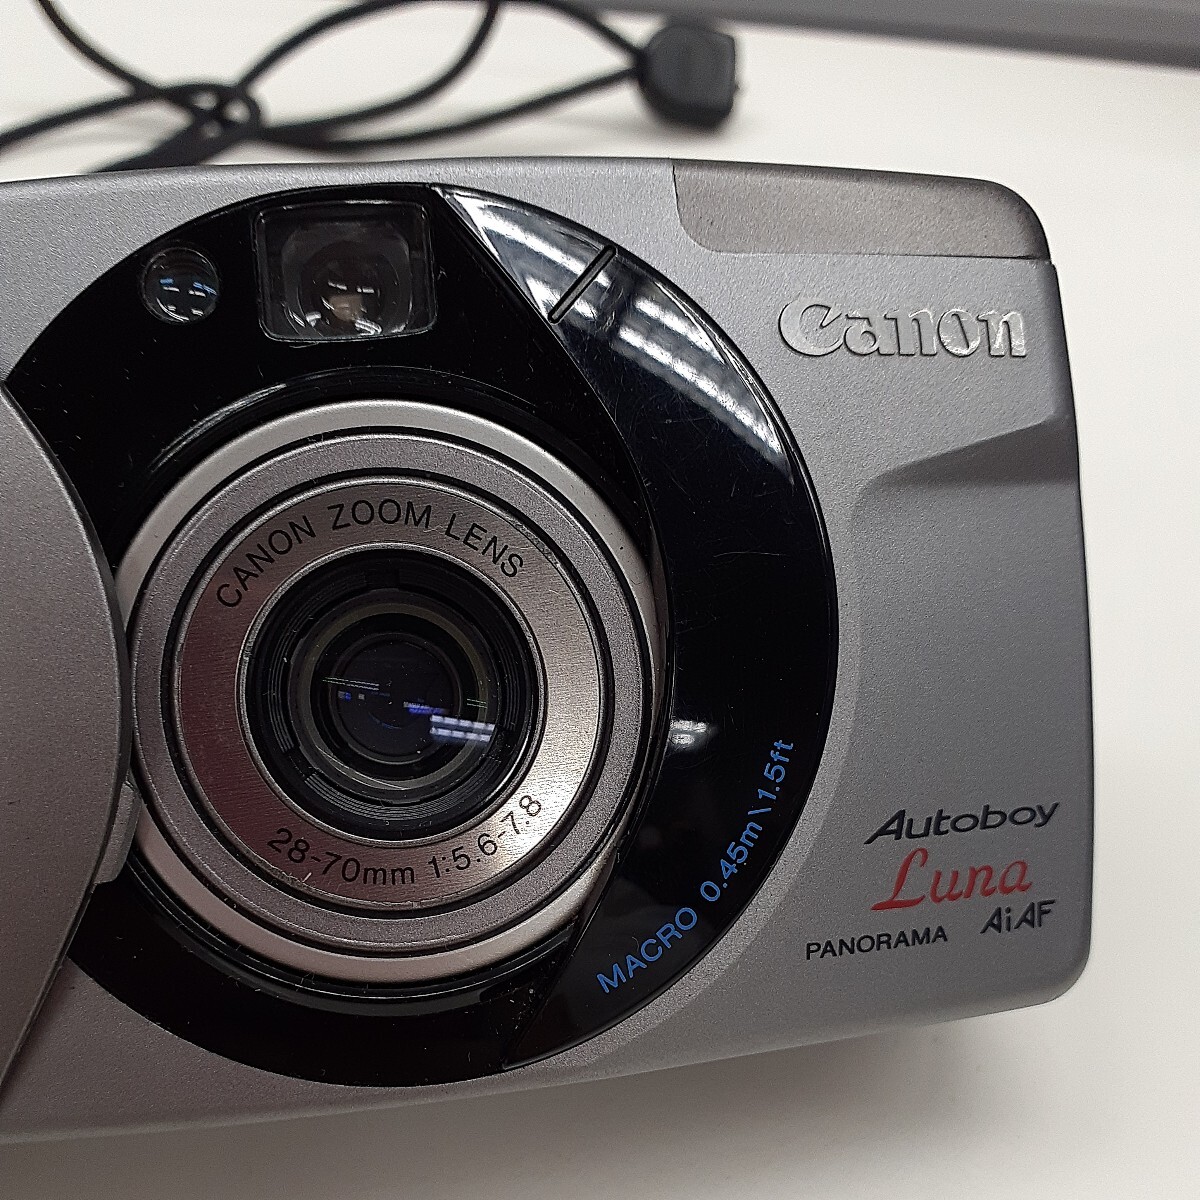 Canon キャノン Autoboy Luna PANORAMA Ai AF 28-70mm 1:5.6-7.8　コンパクトフィルムカメラ　み_画像7